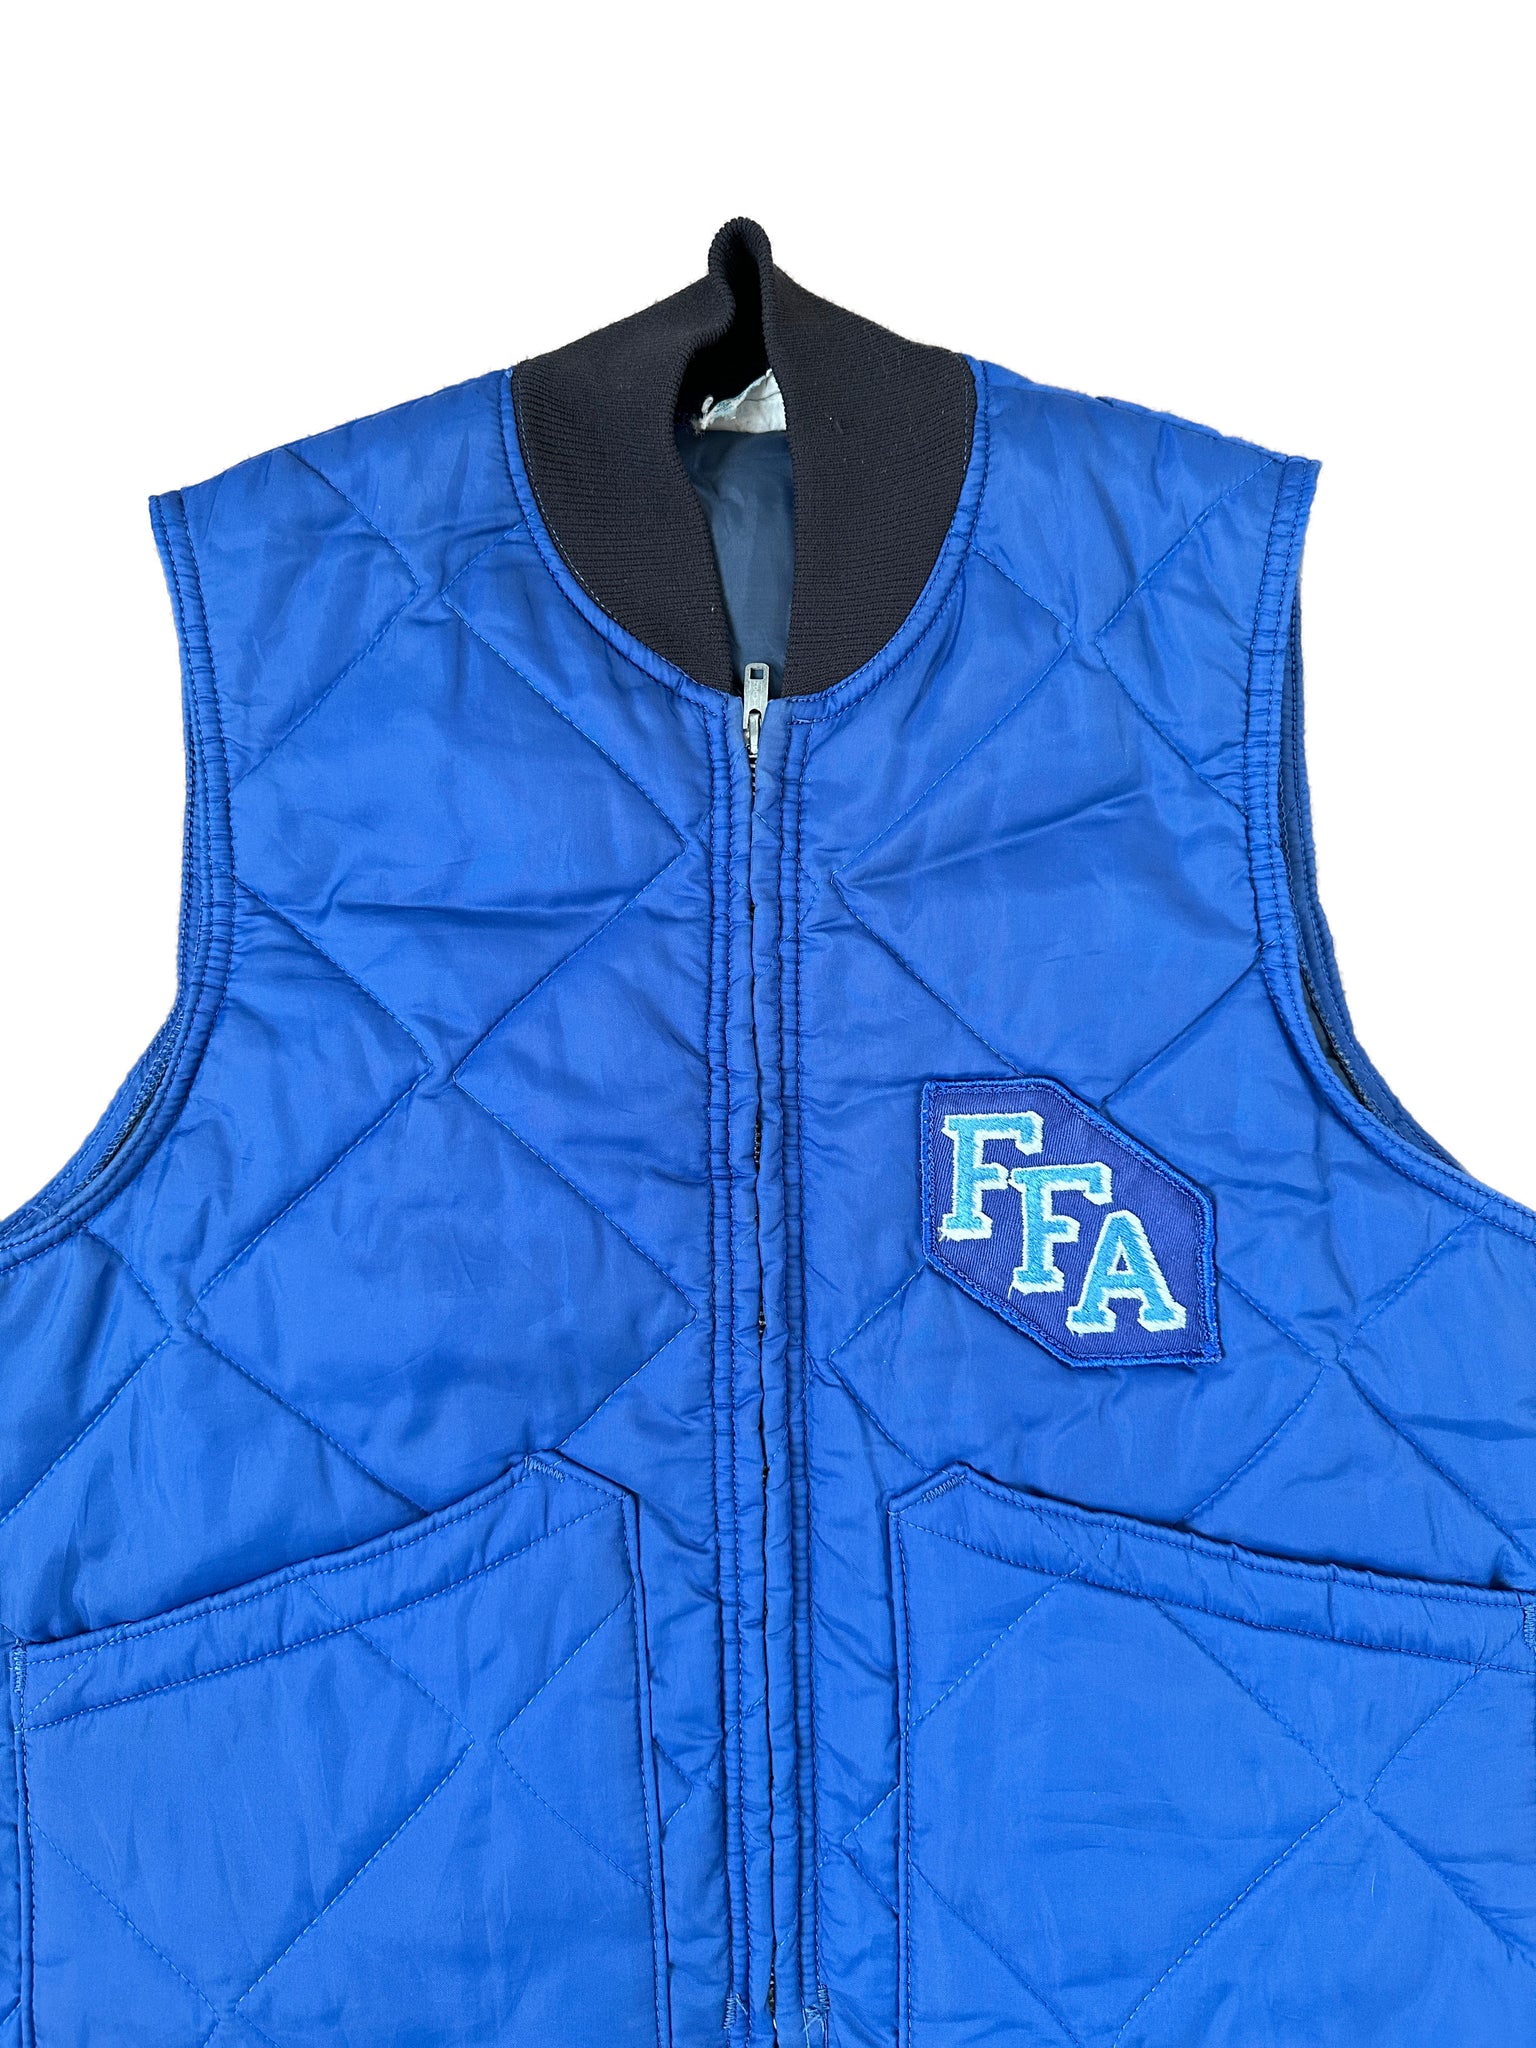 80s ffa jacket